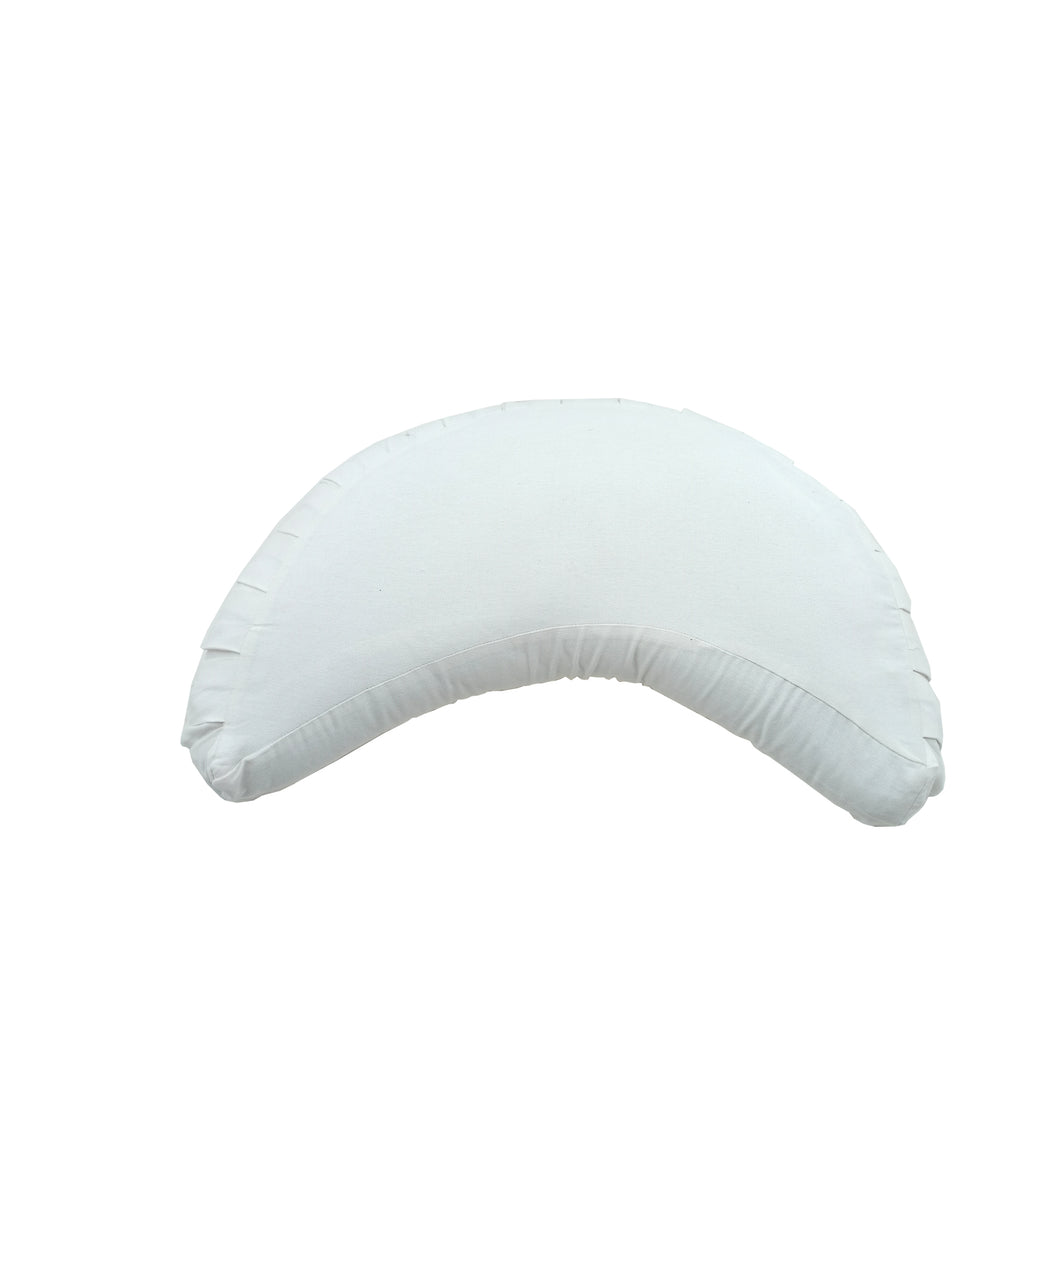 Meditation Cushion Crescent Shaped Zafu Filled With Buckwheat Hulls - Solid White